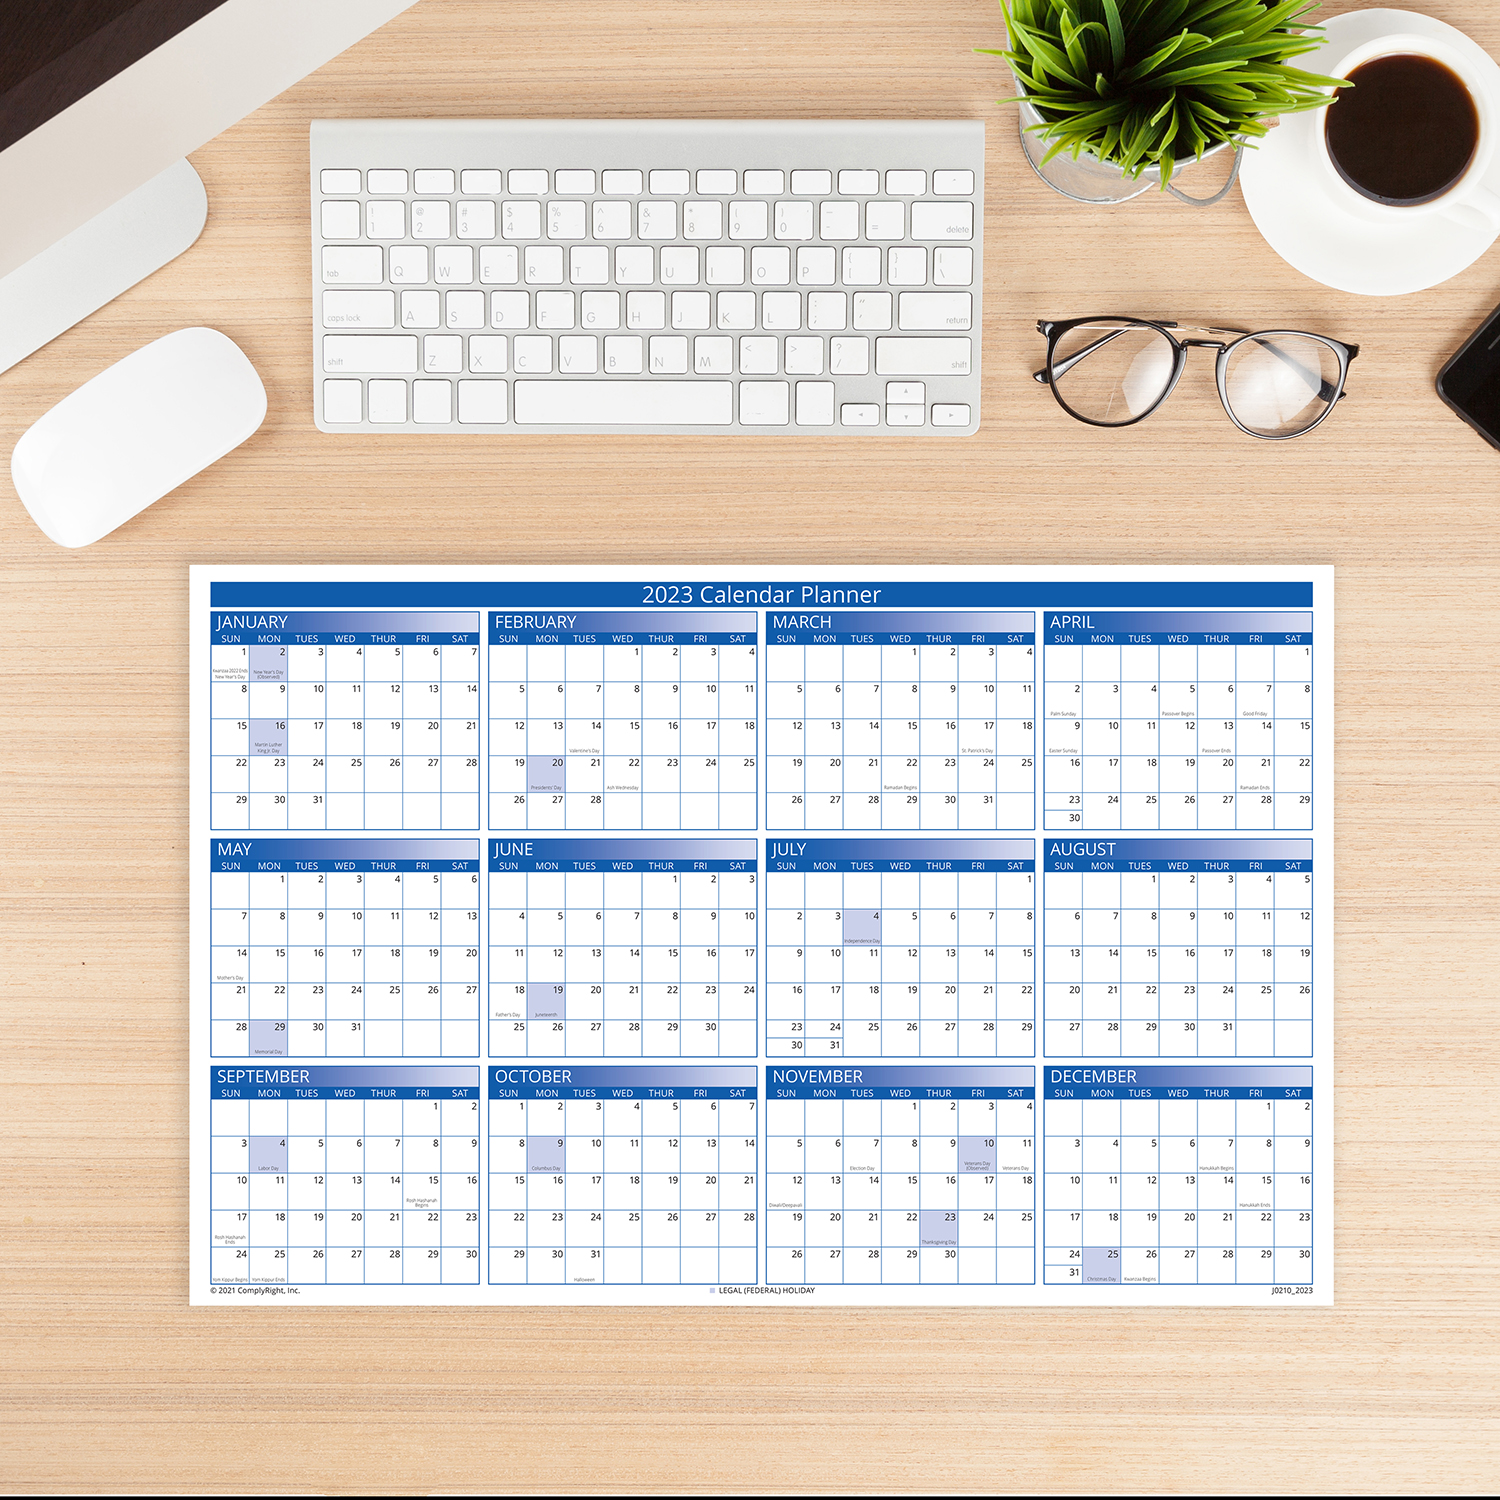 2023 11 x 17 Calendar Planner | HRdirect